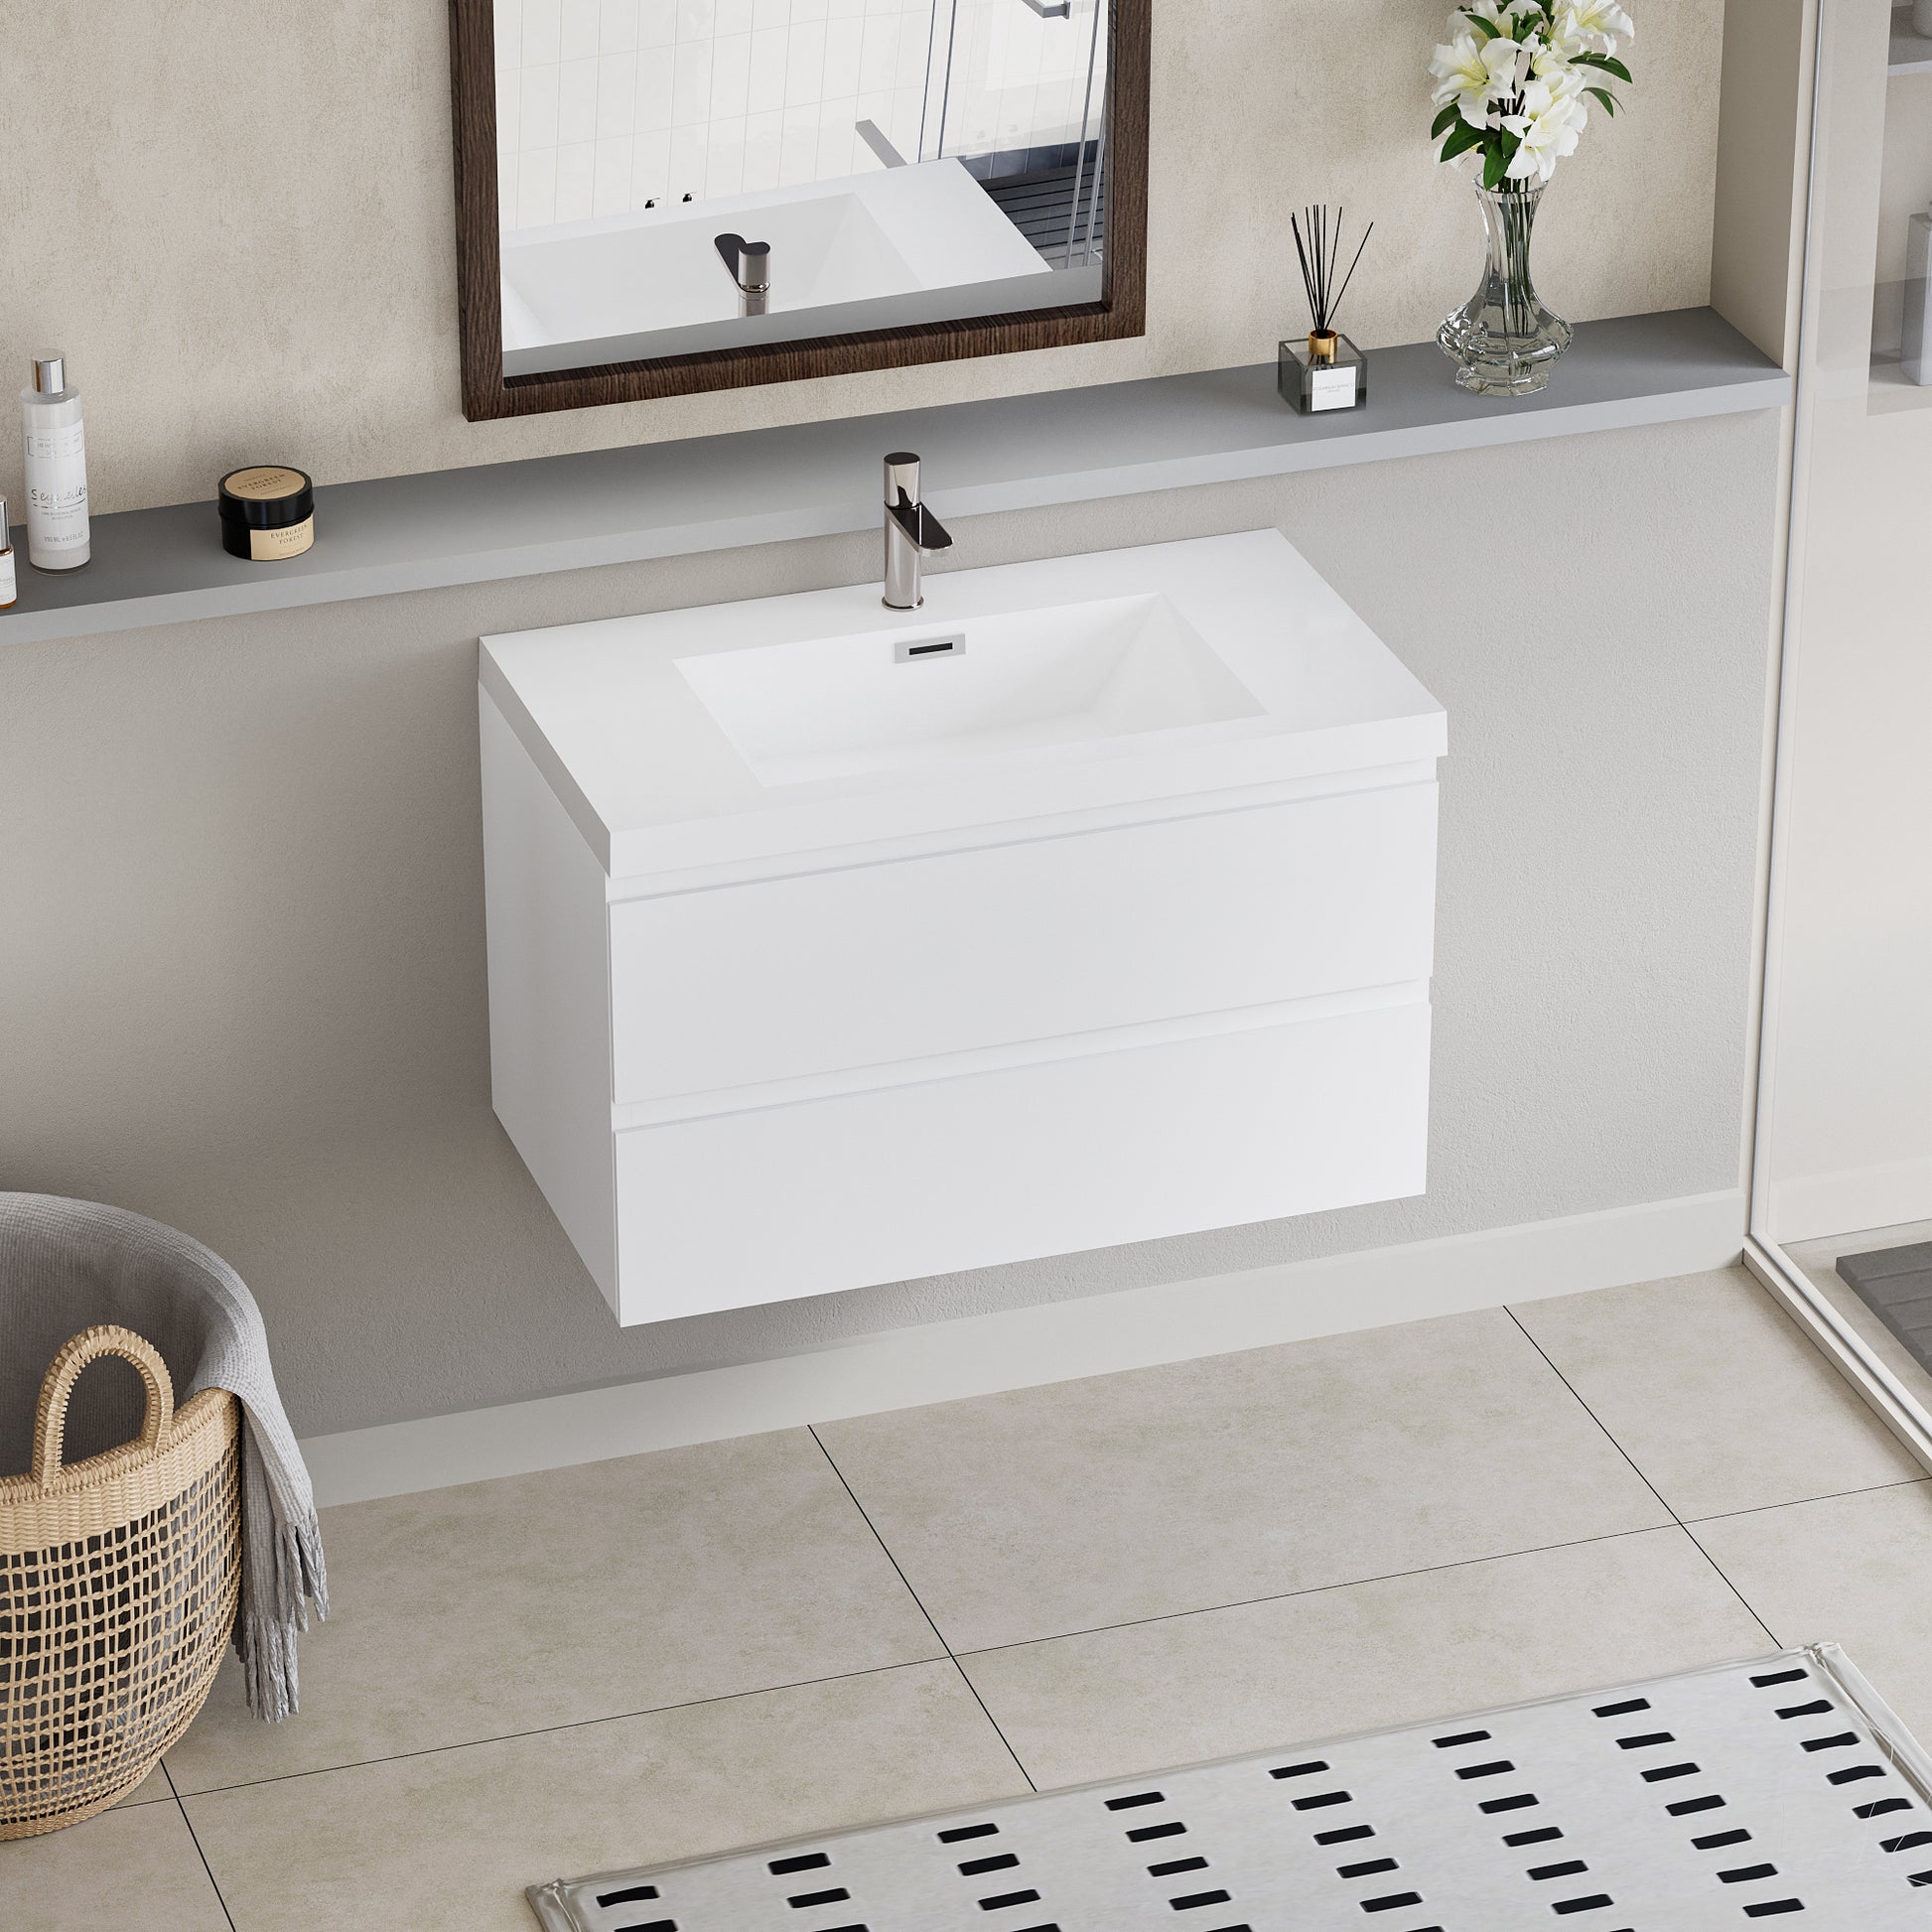 36" Floating Bathroom Vanity with Sink, Modern Wall 2-glossy white-bathroom-wall mounted-mdf